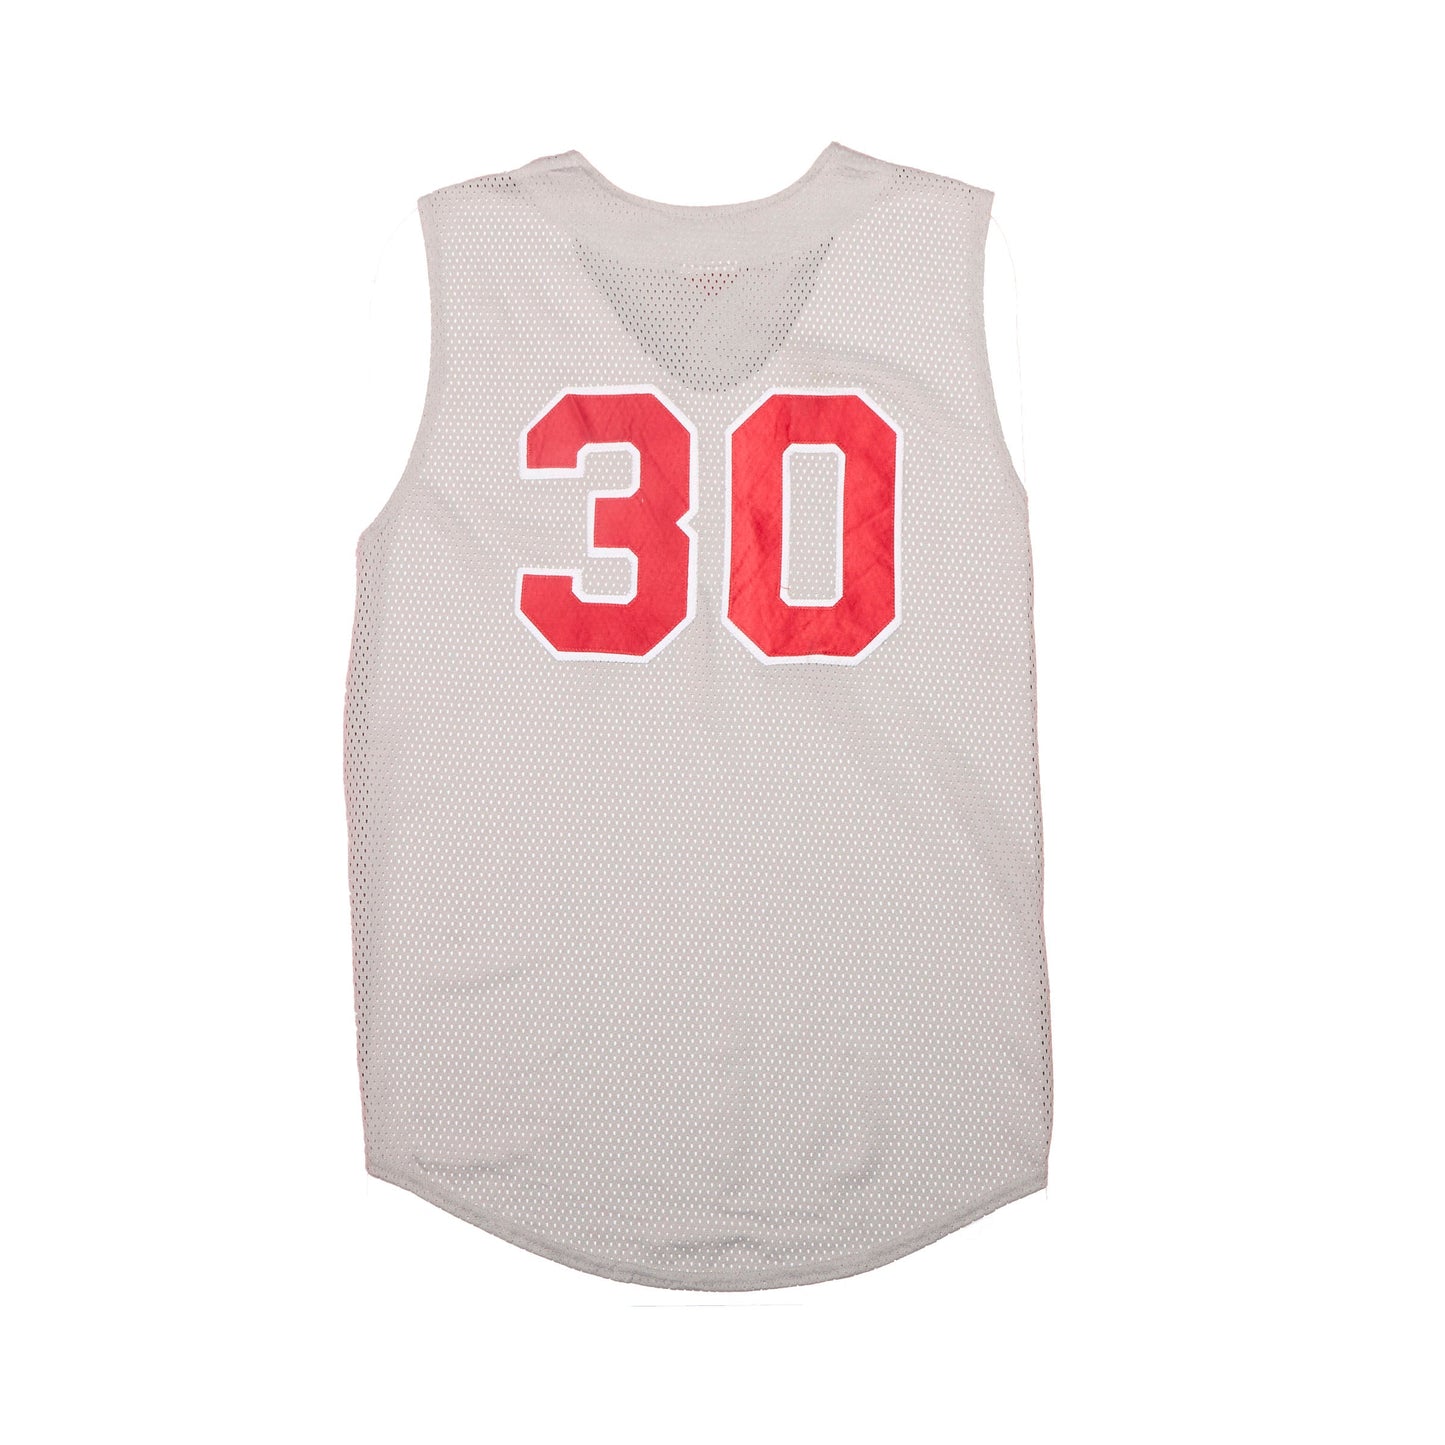 Patch Sleeveless Sports Shirt - XL